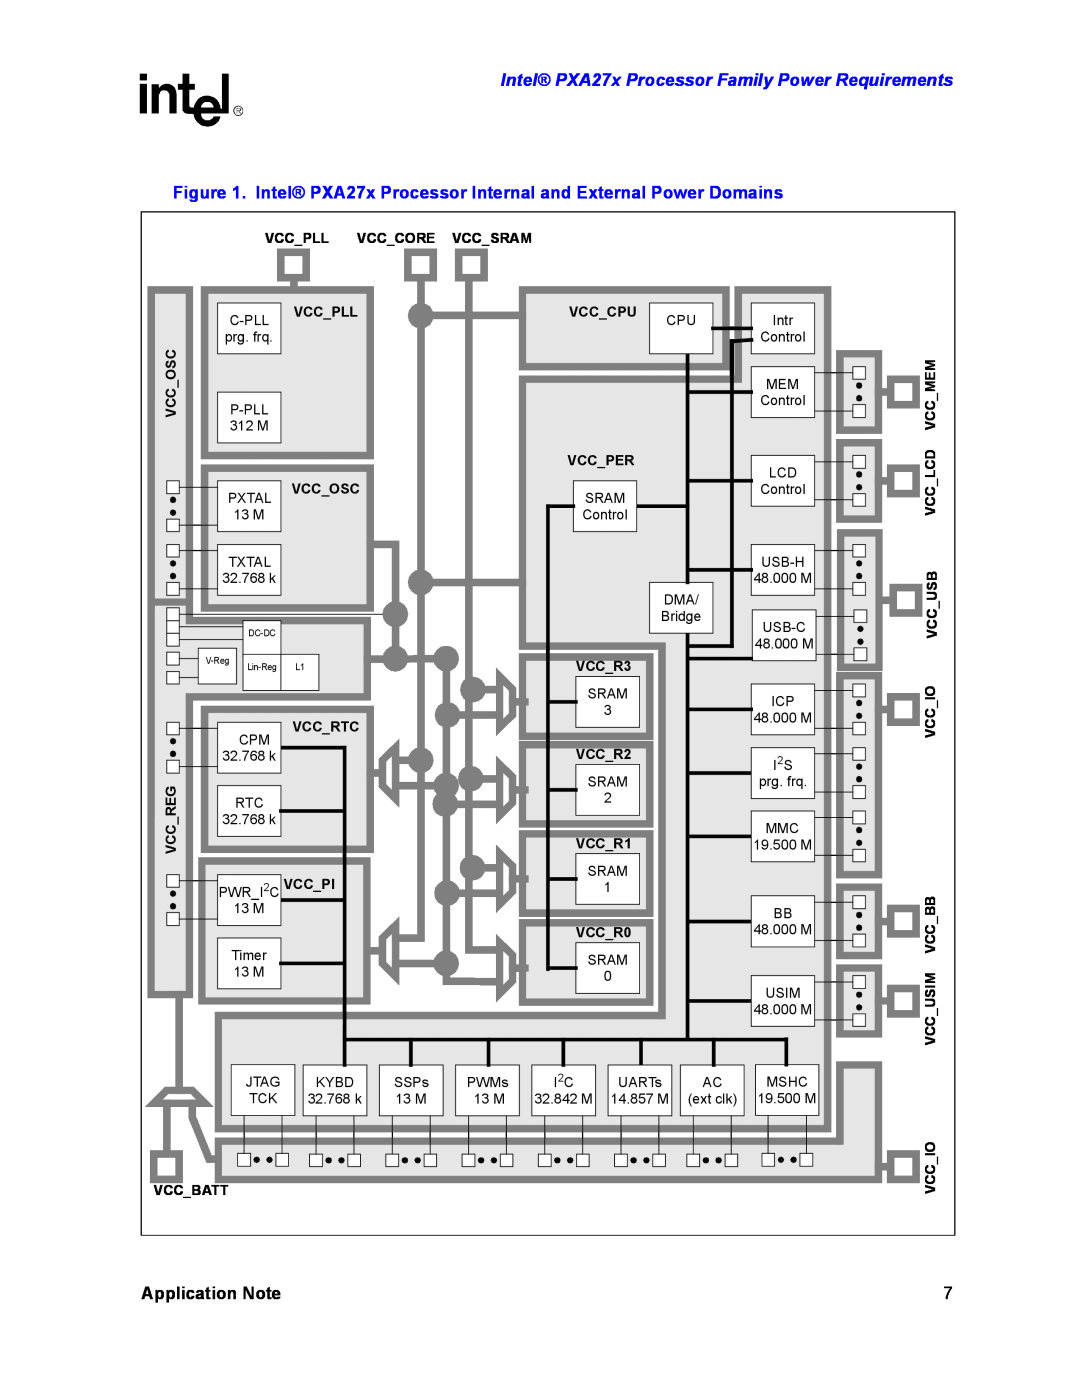 Intel PXA27X Intel PXA27x Processor Internal and External Power Domains, Intel PXA27x Processor Family Power Requirements 